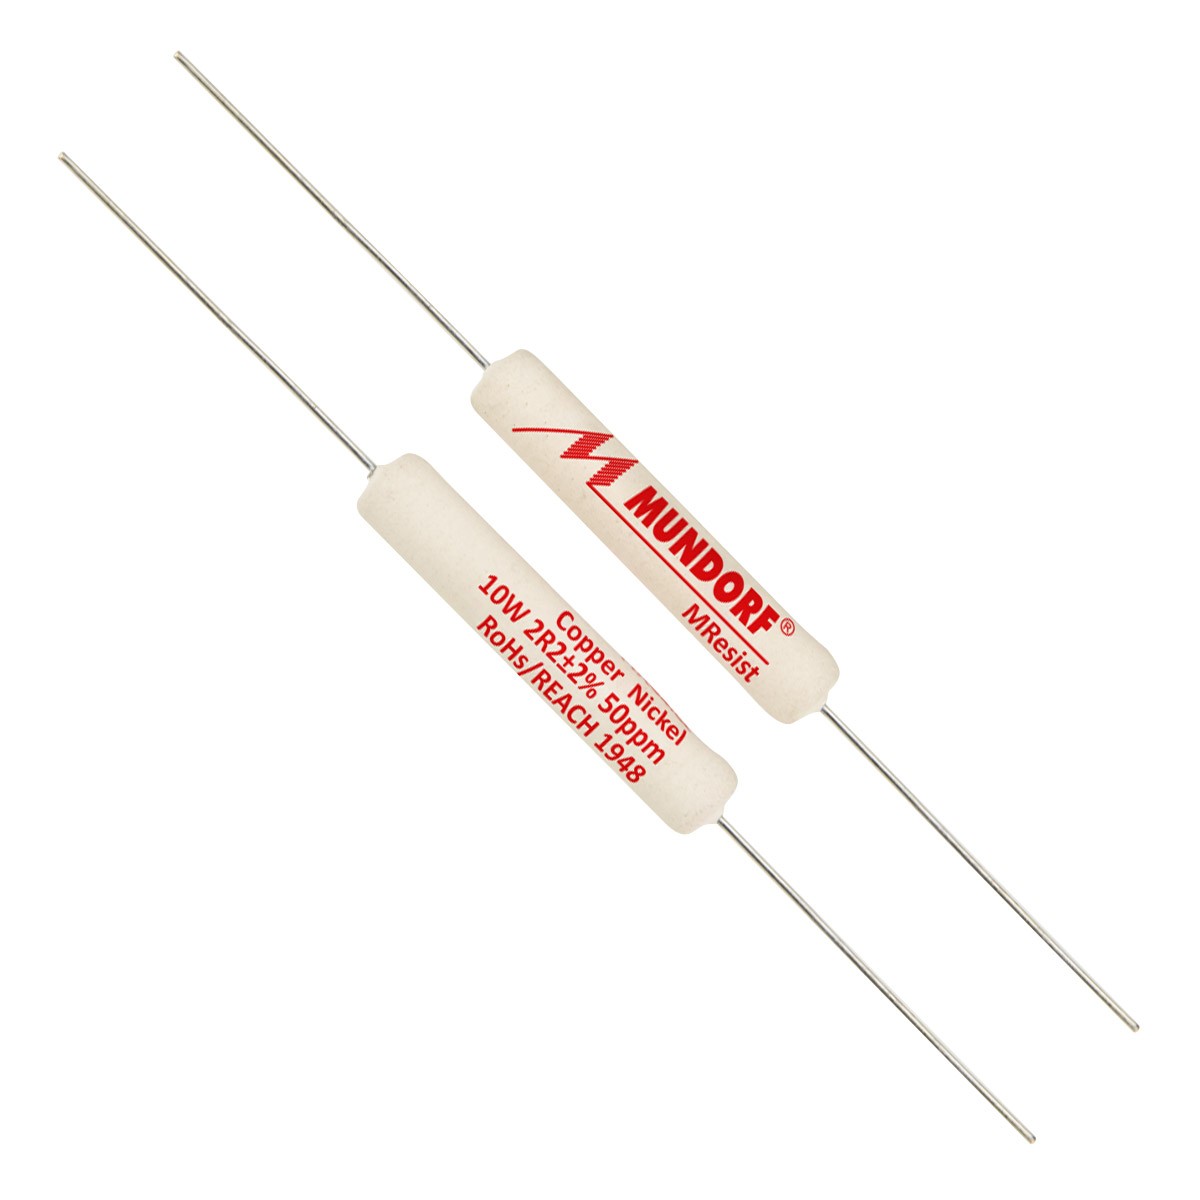 MUNDORF MRESIST CLASSIC Resistor 10W 6.8 Ohm